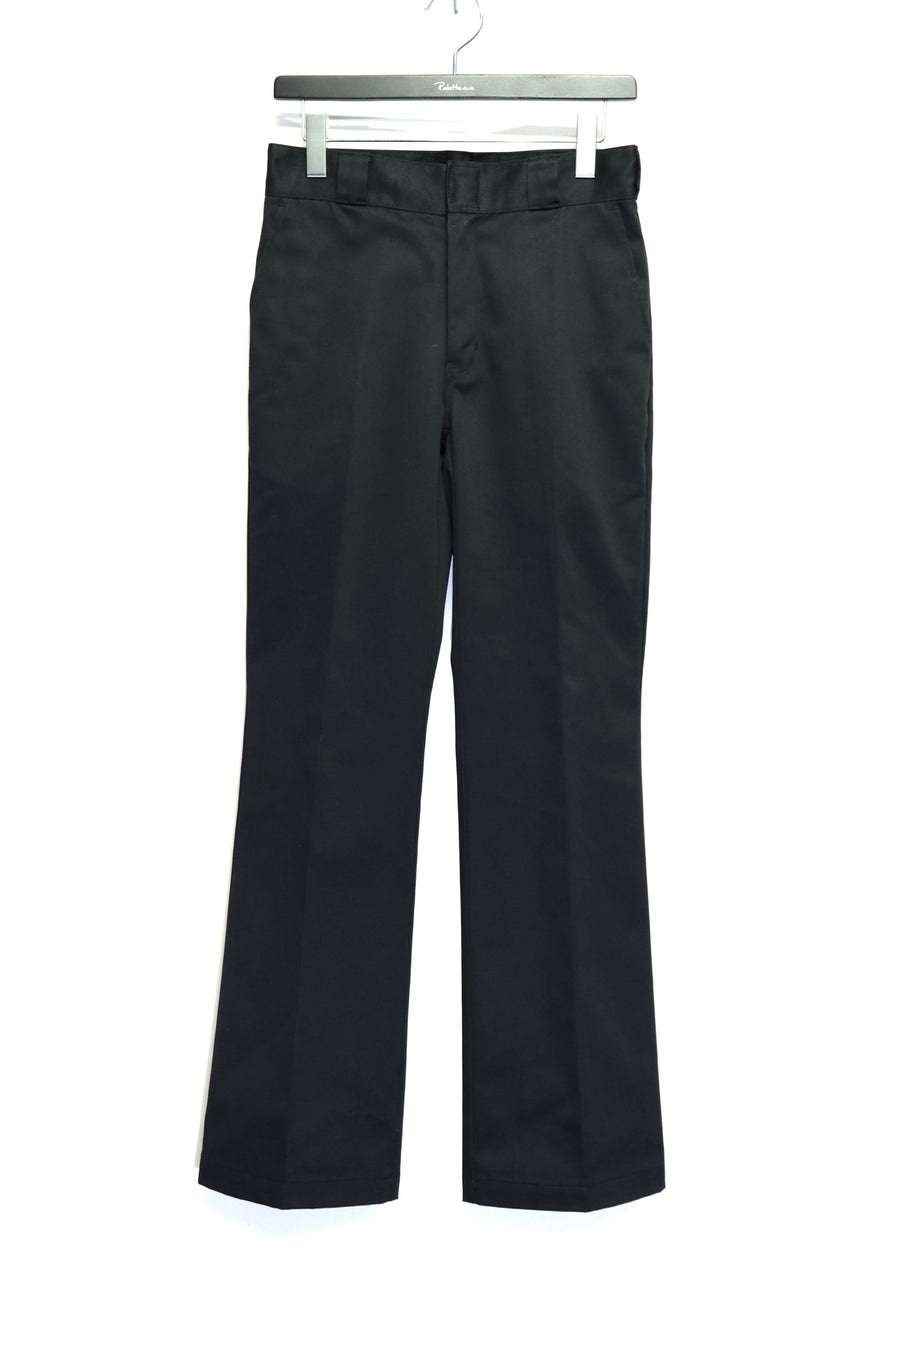 TOGA Virilis's Flare Pants Dickies SP Black mail order | Palette 